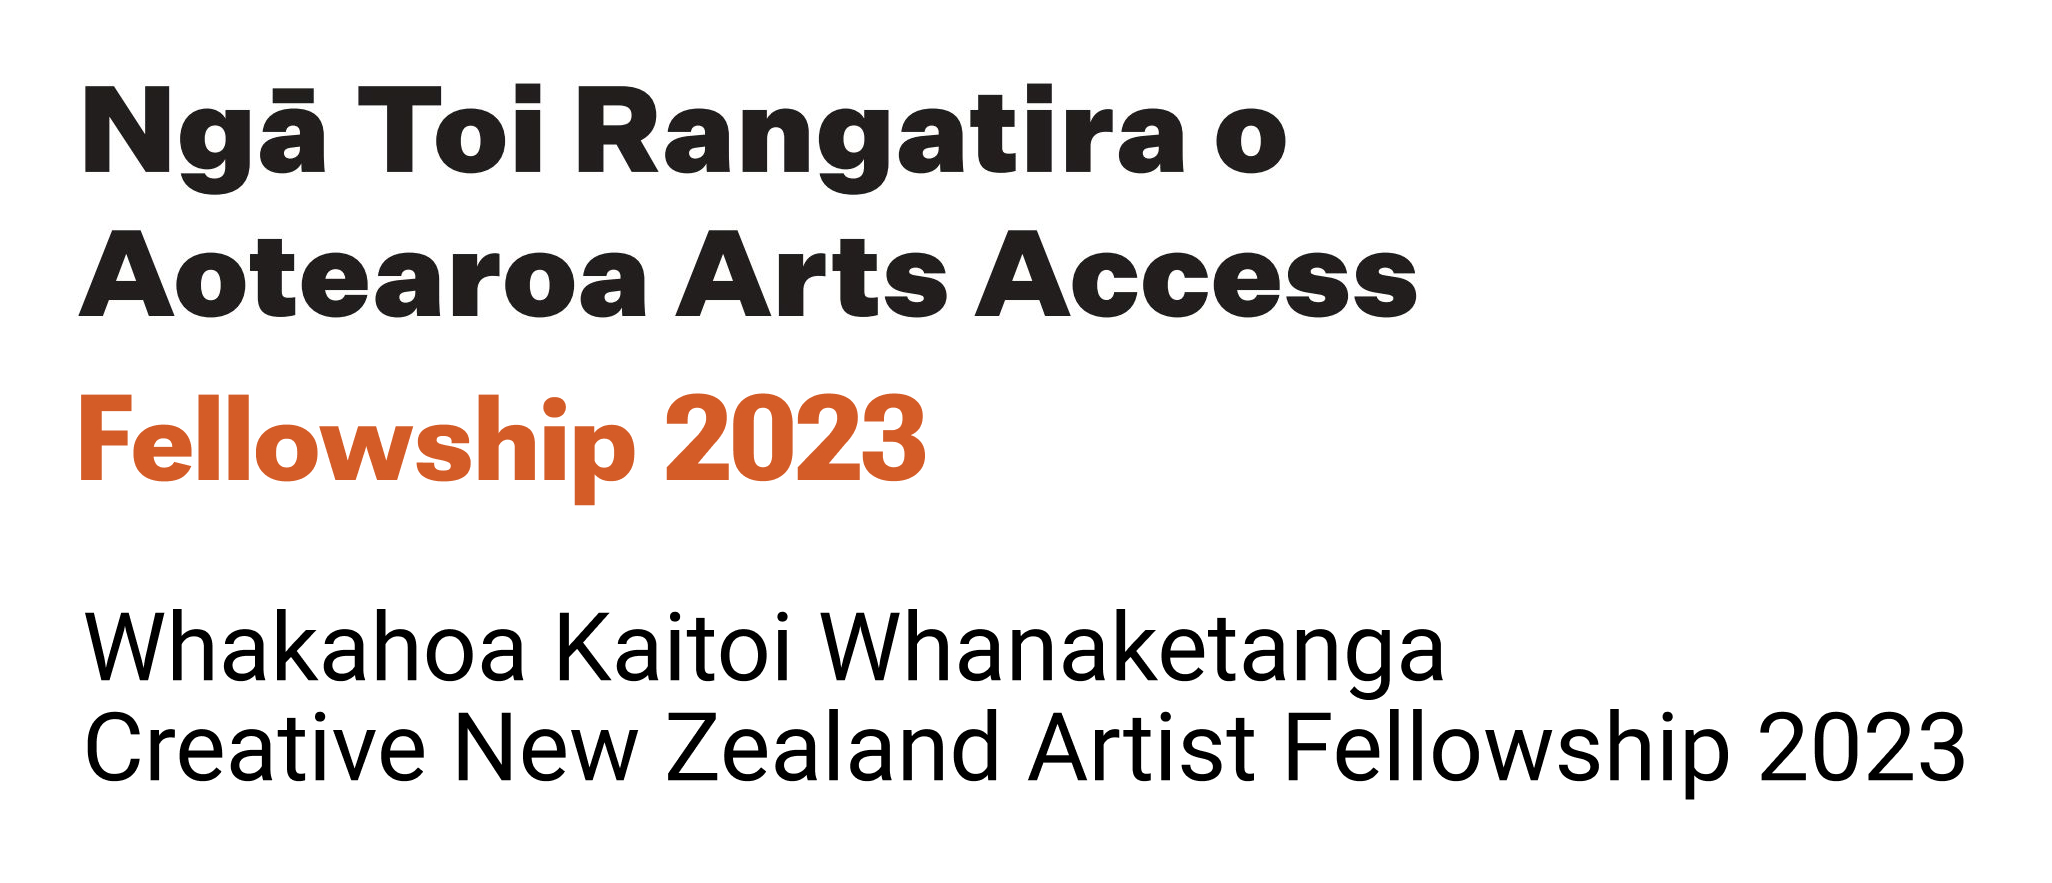 logo has the word Ngā Toi Rangatira o Aotearoa Arts Access Fellowships 2023, followed by  Whakahoa Kaitoi Whanaketanga Creative New Zealand Artist Fellowship